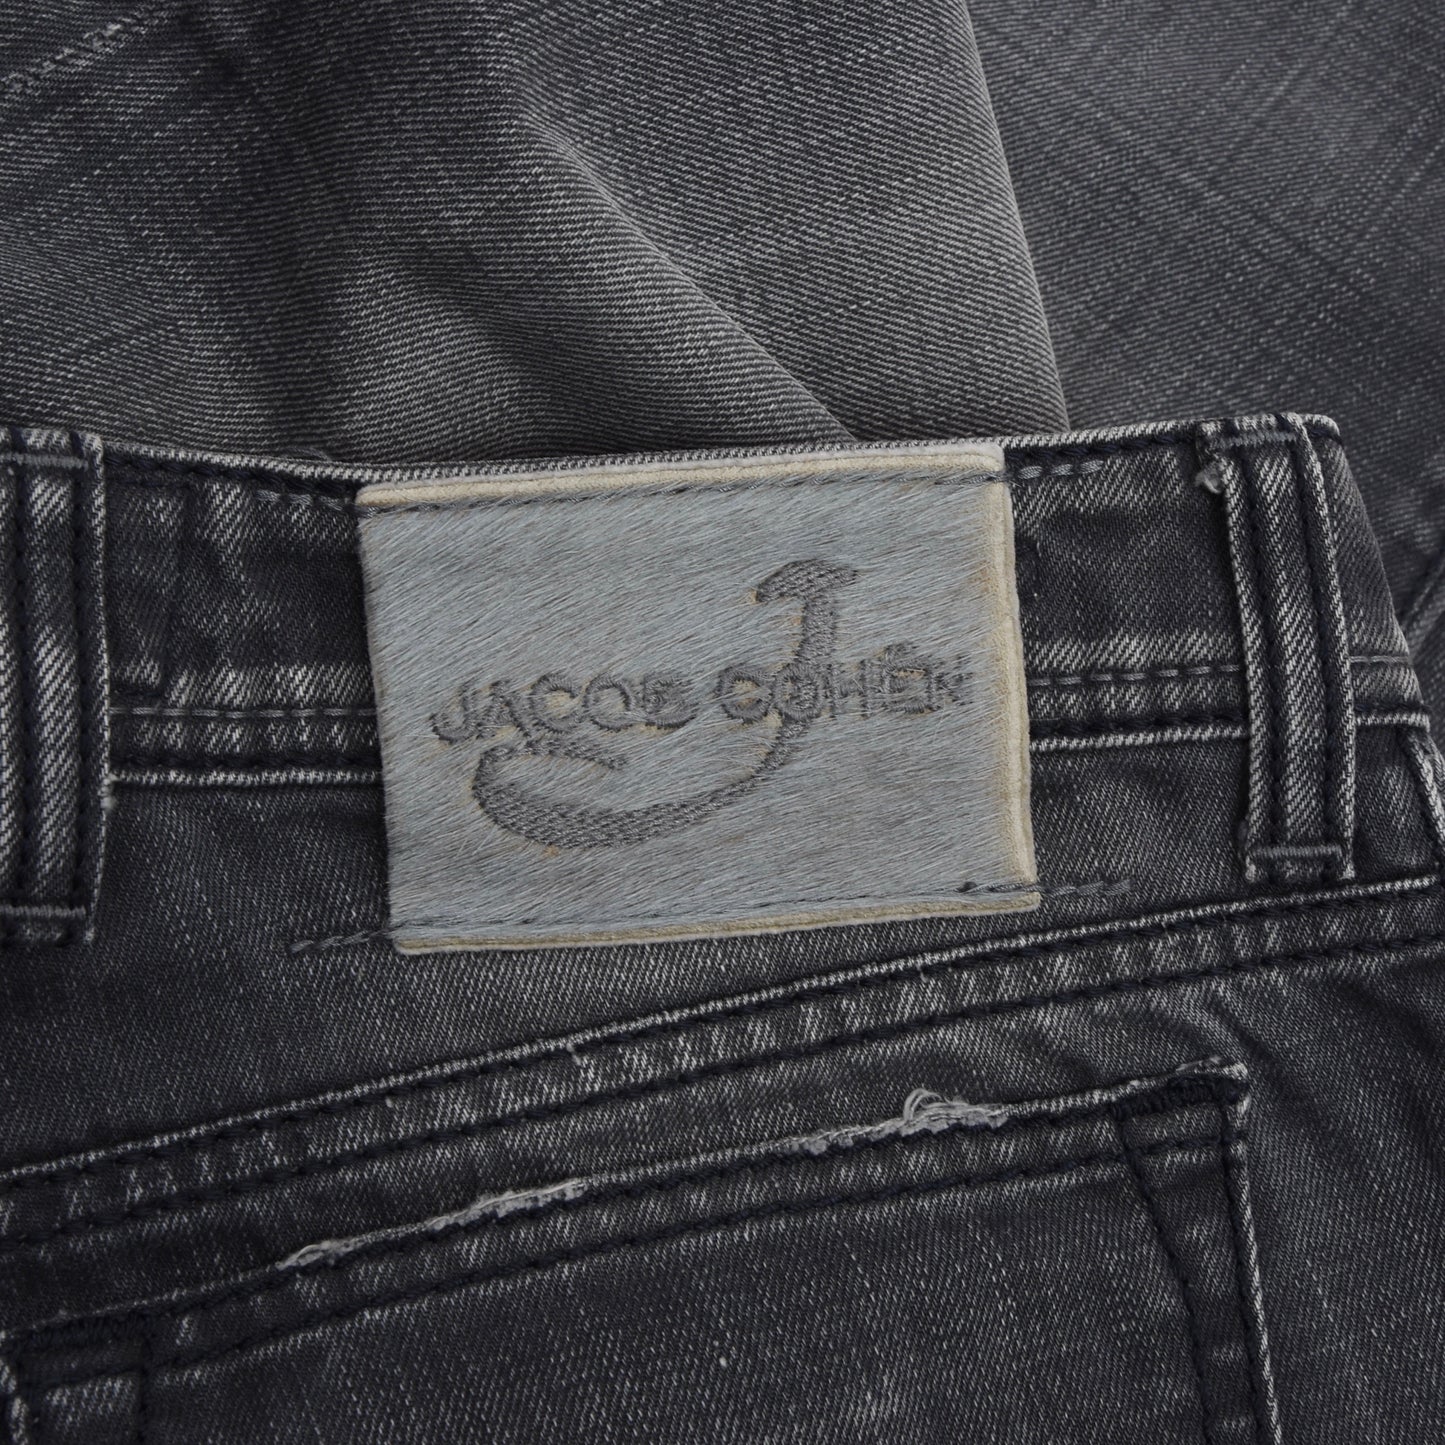 Jacob Cohen Jeans Model J688 Size W32